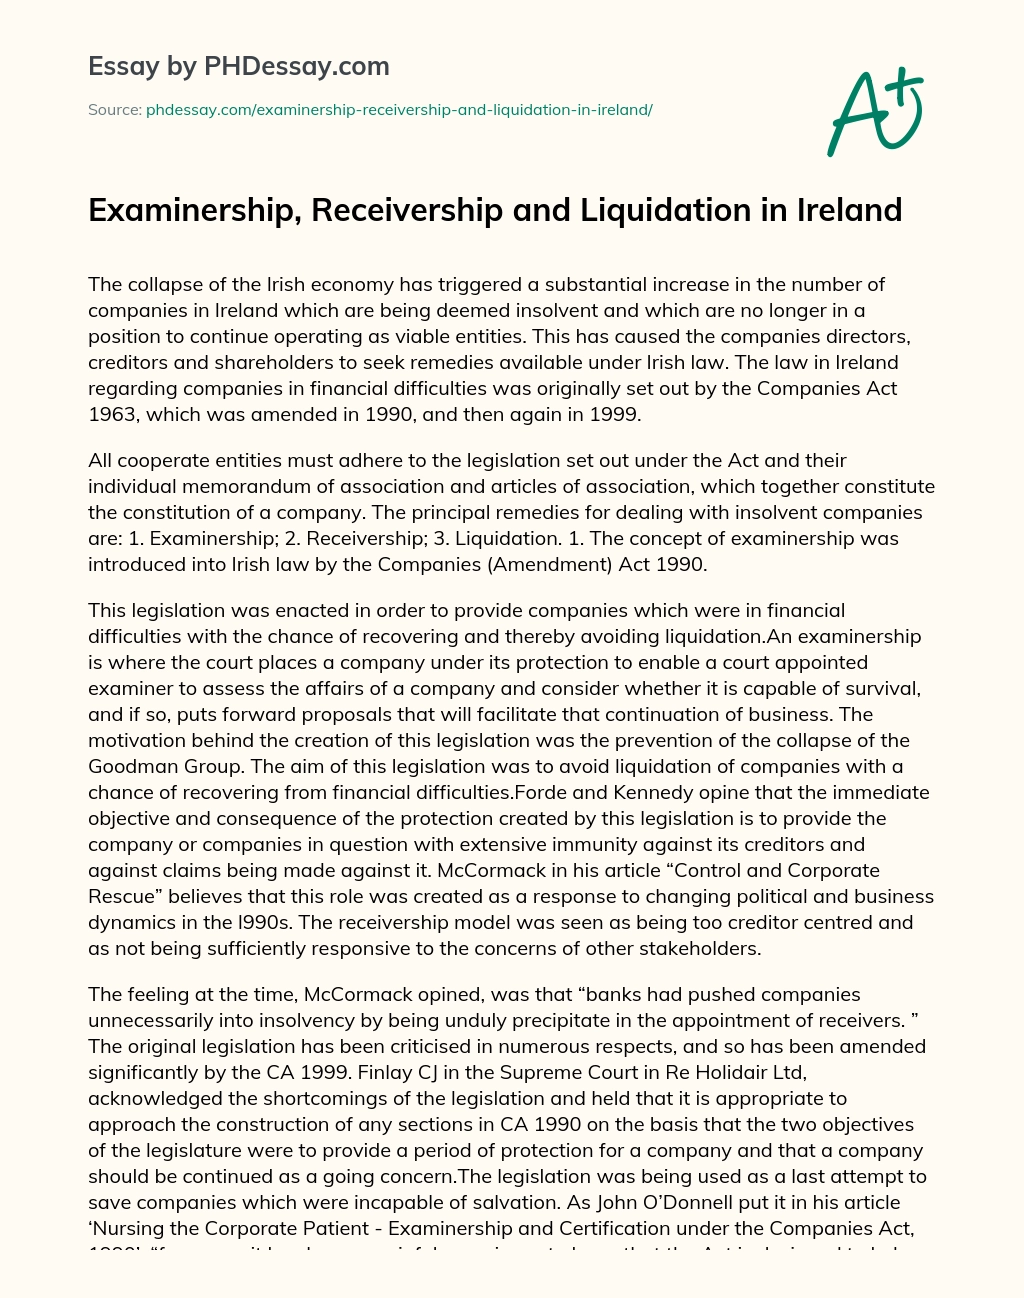 Examinership, Receivership and Liquidation in Ireland essay